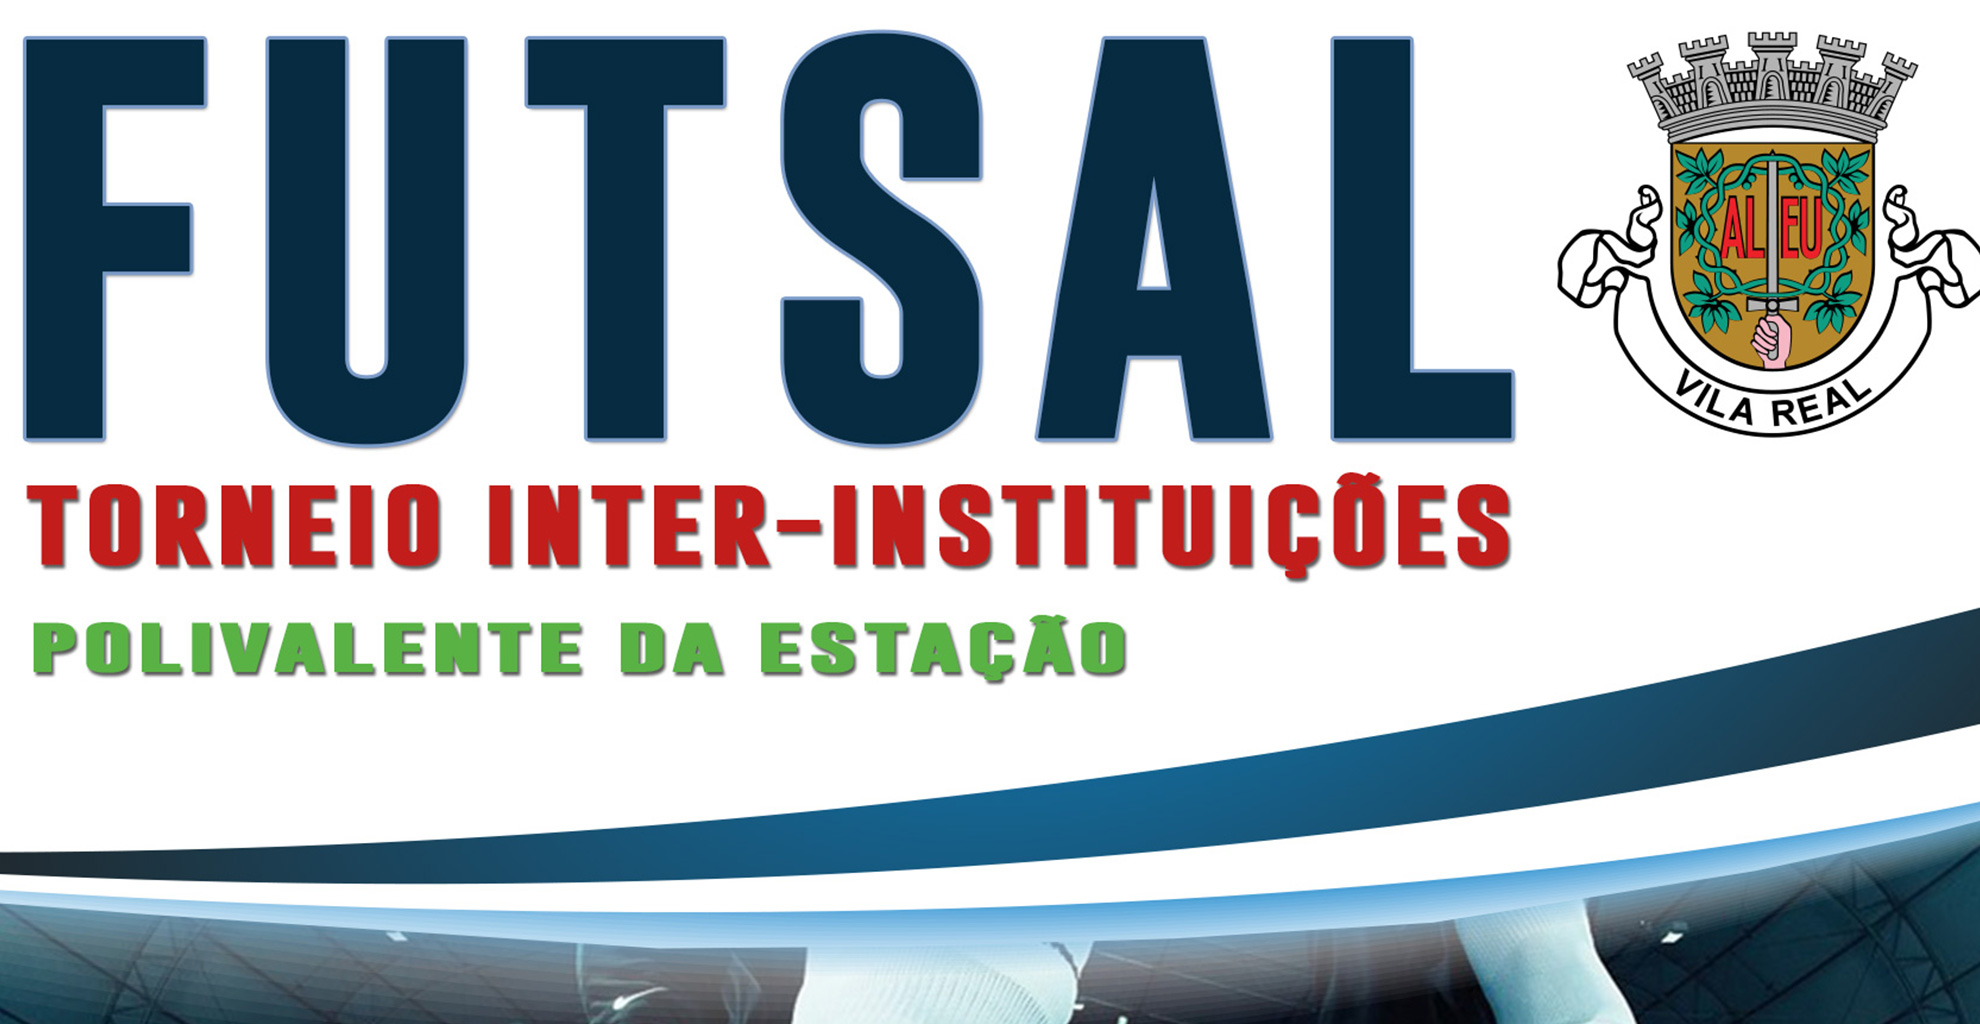 XIX TORNEIO INTER-INSTITUIÇÕES DE FUTSAL